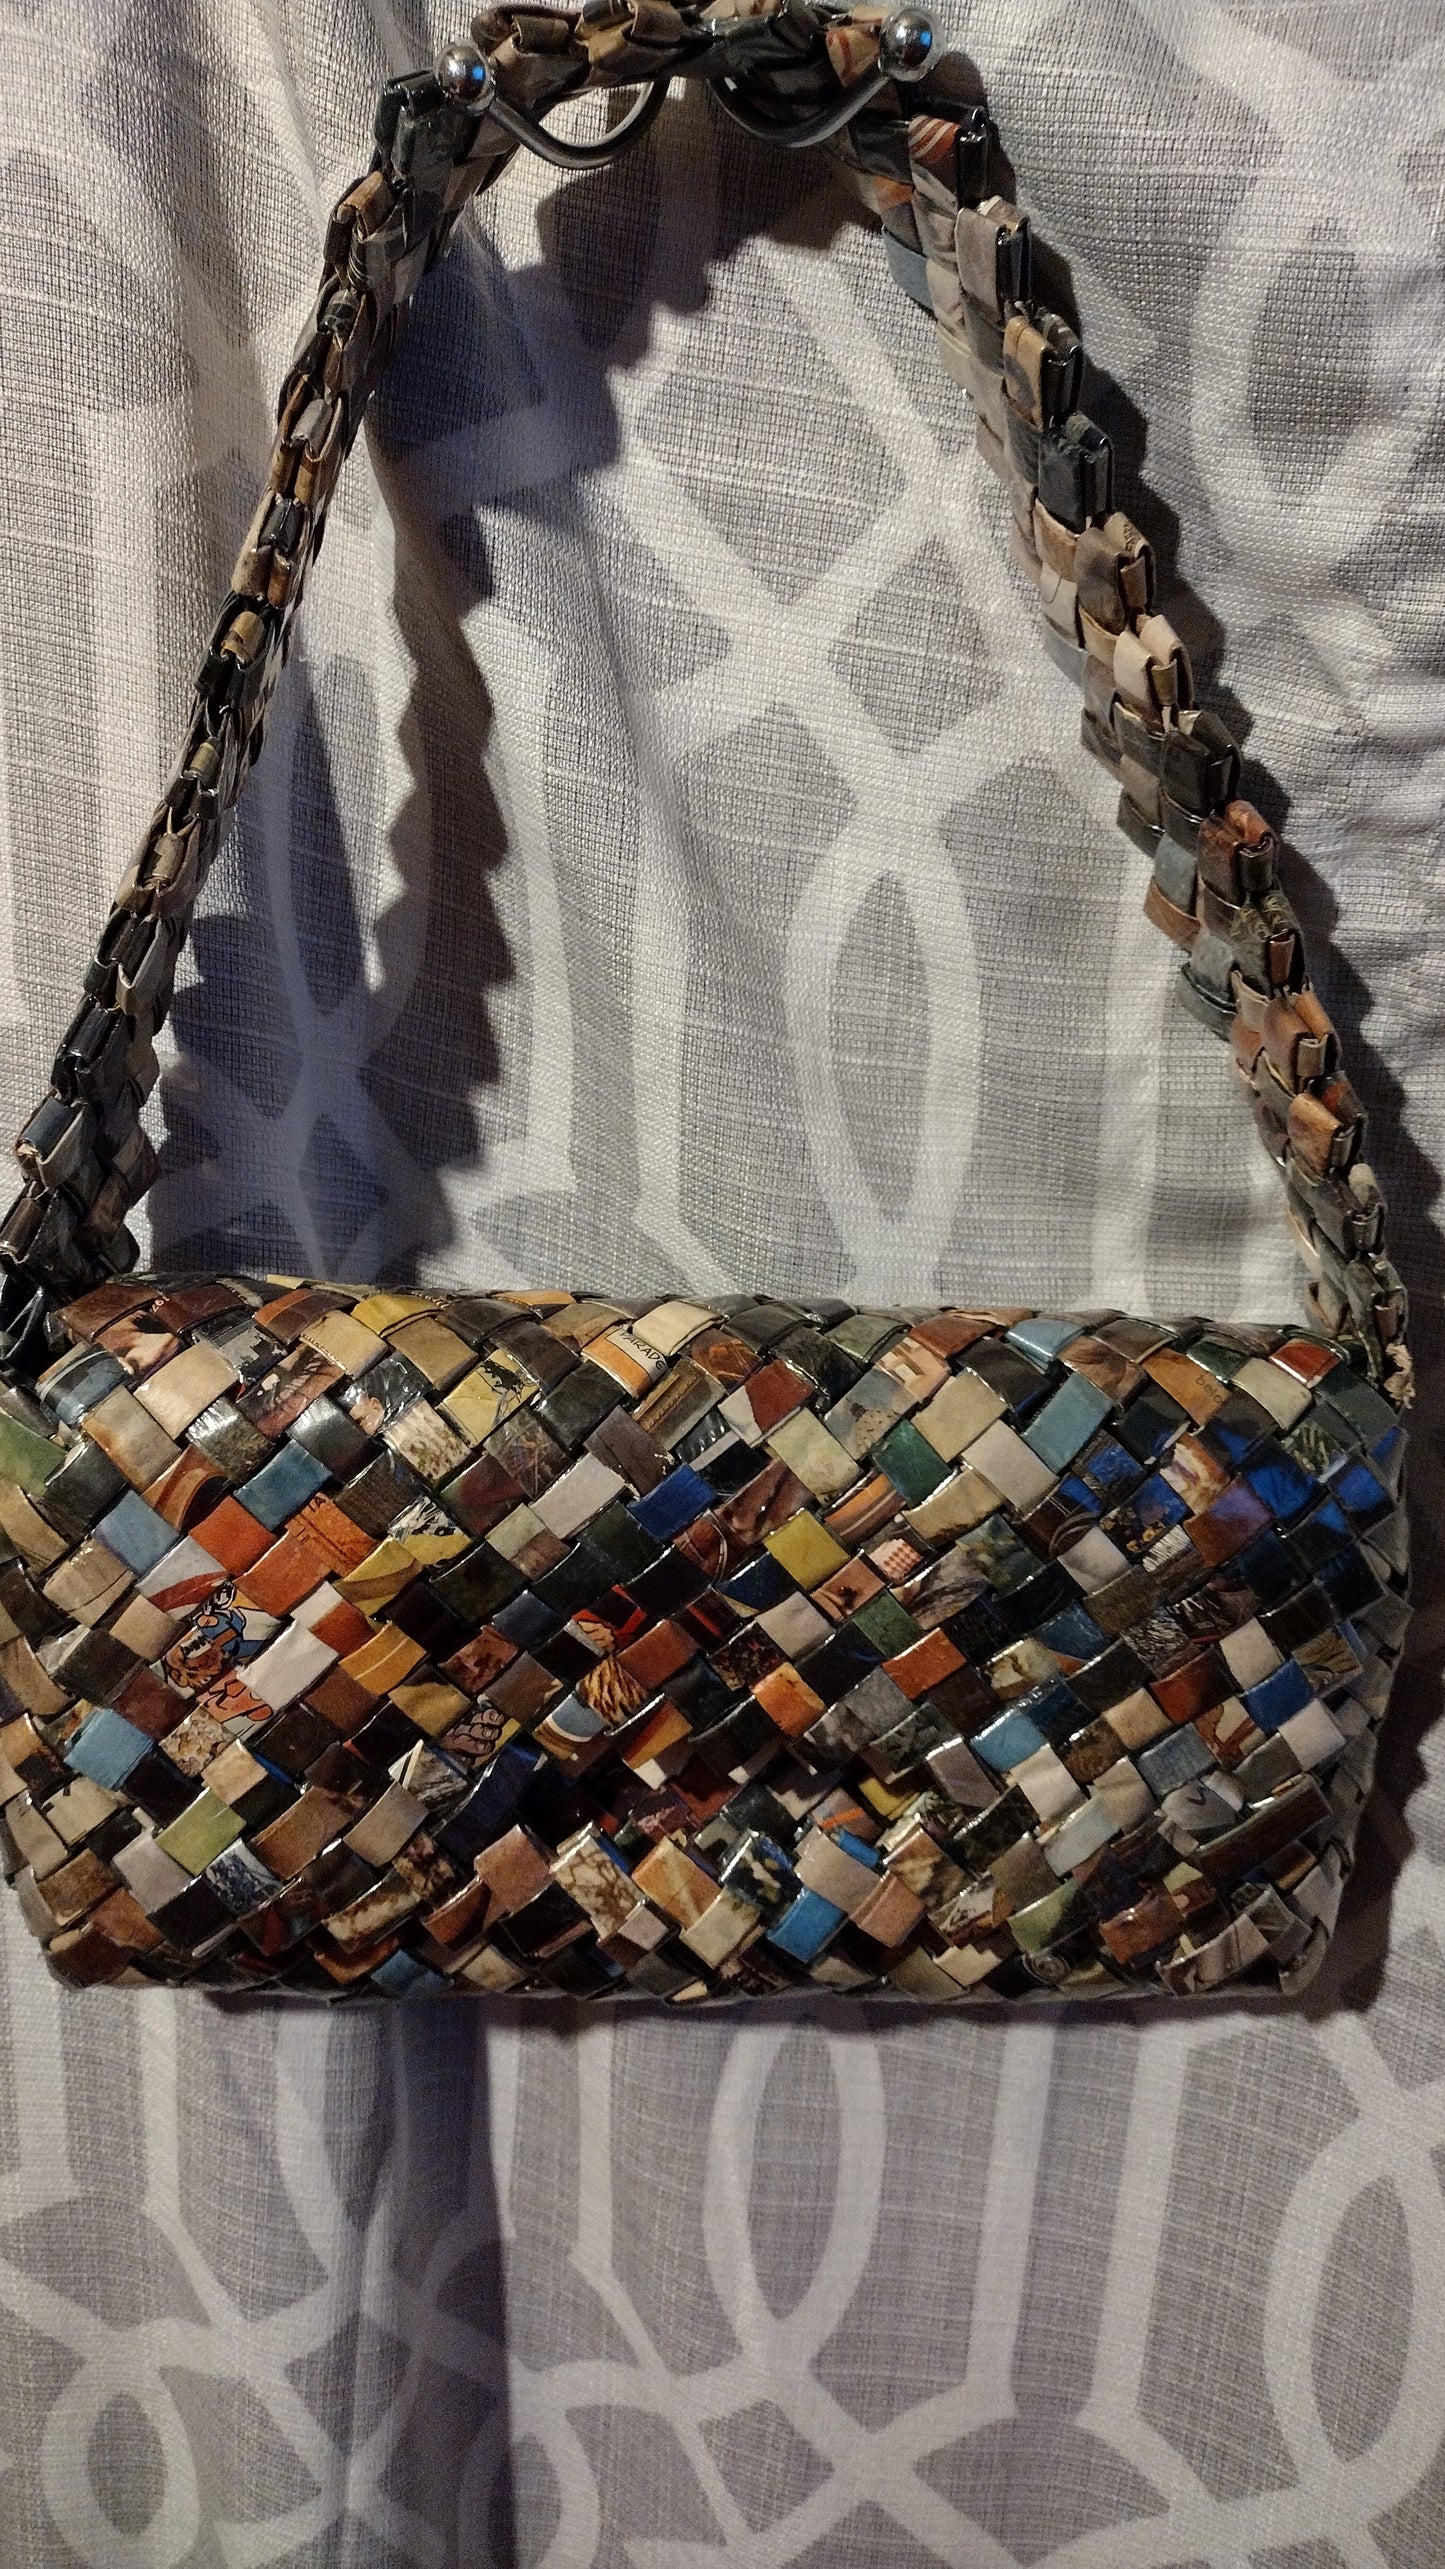 Women's colorful shoulder handbag